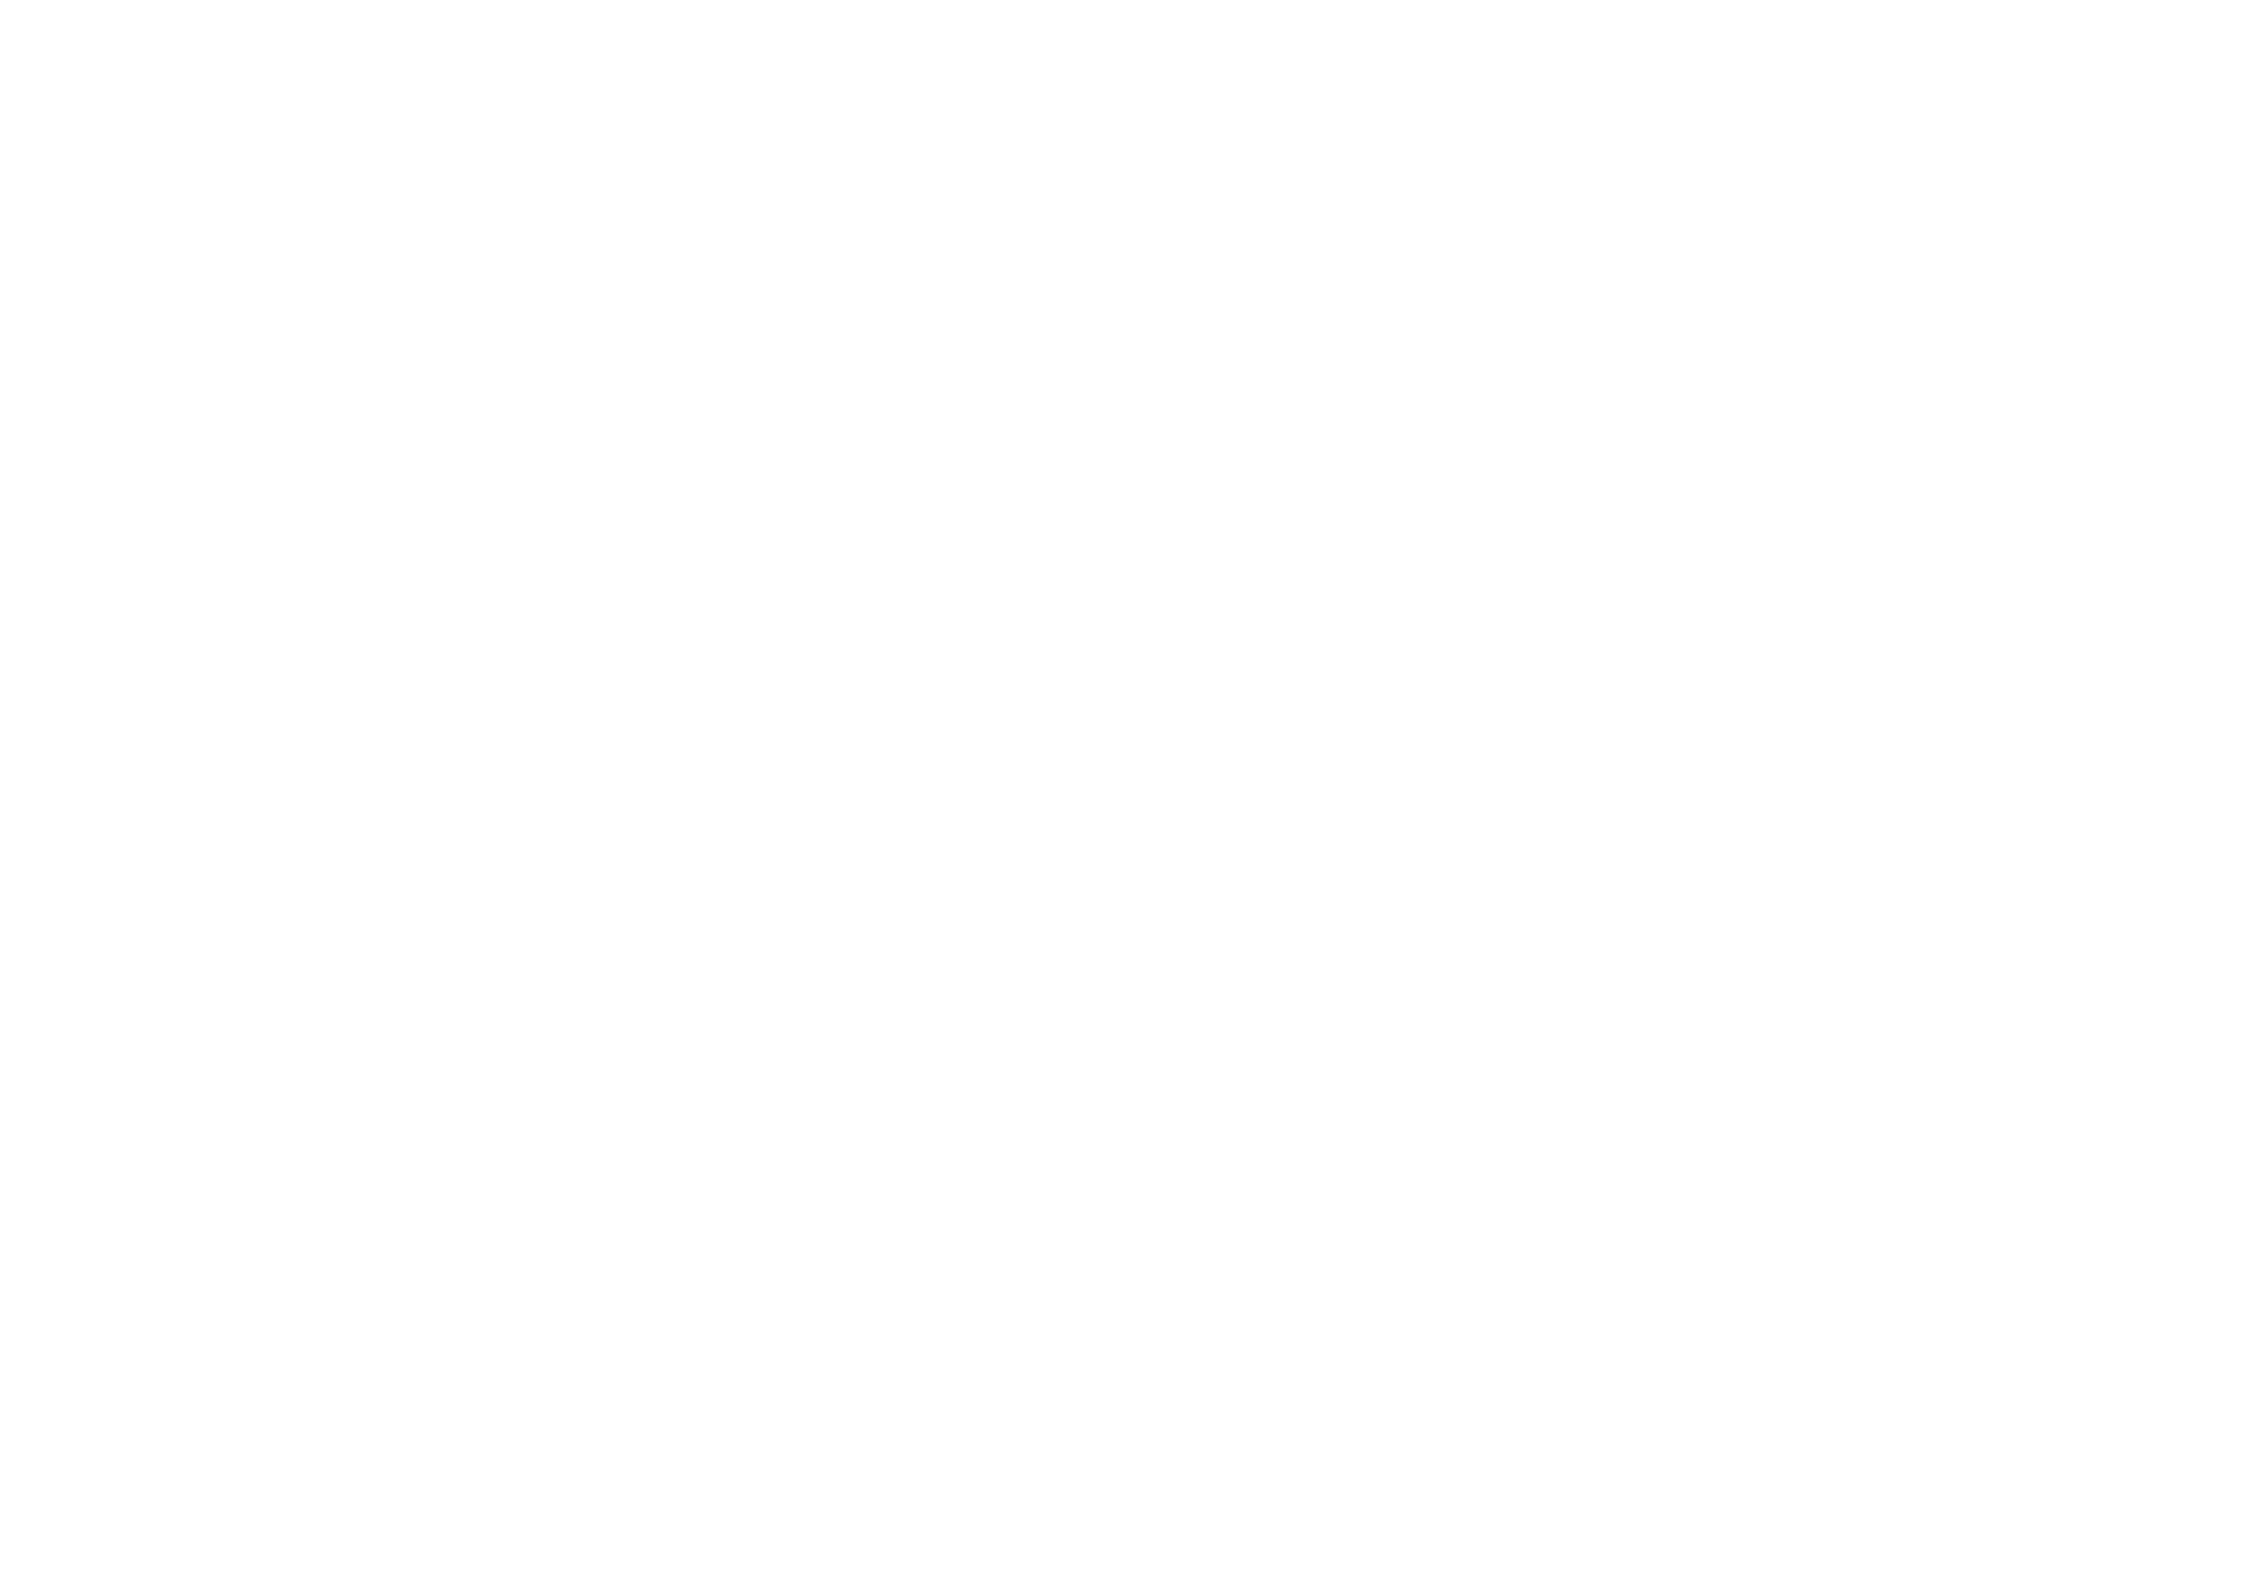 Clit Comedy Club